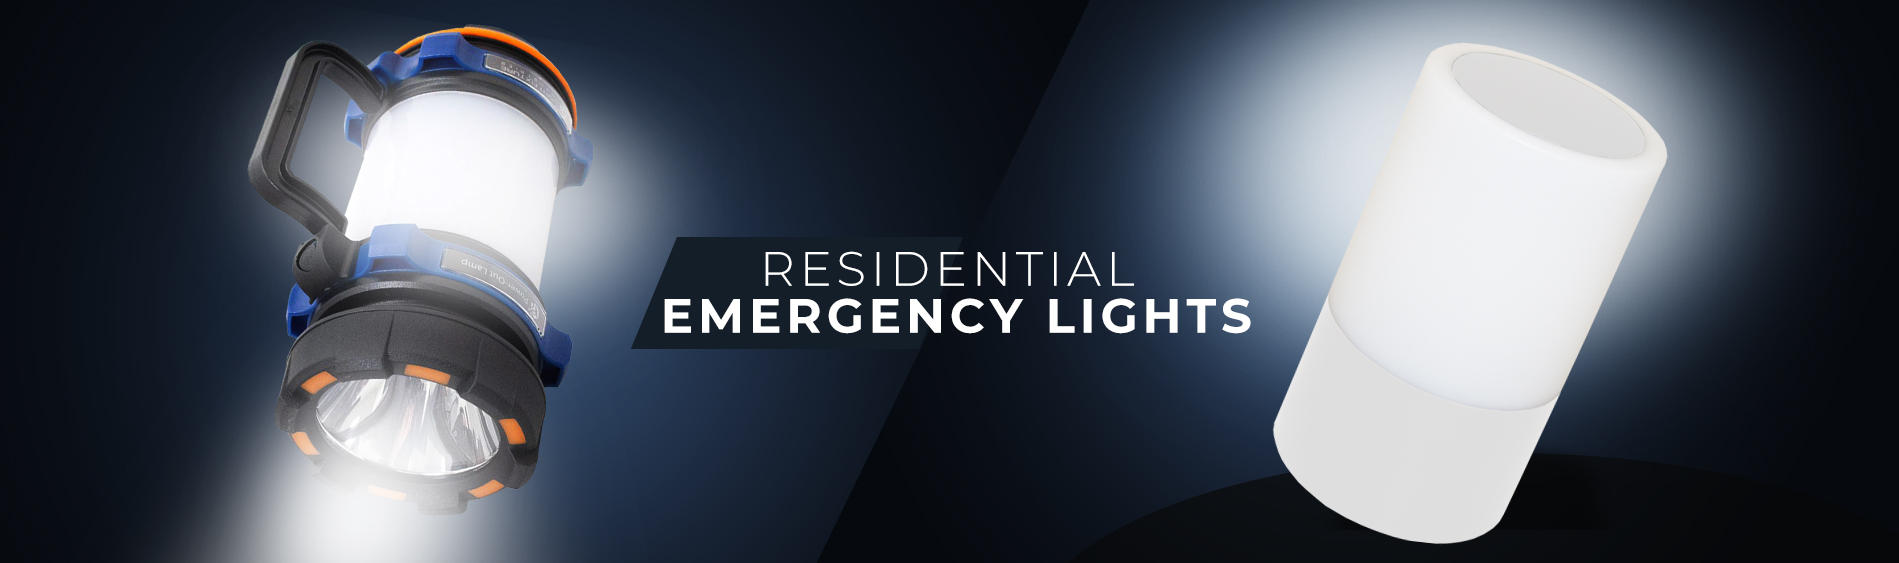 Home Emergency Lights